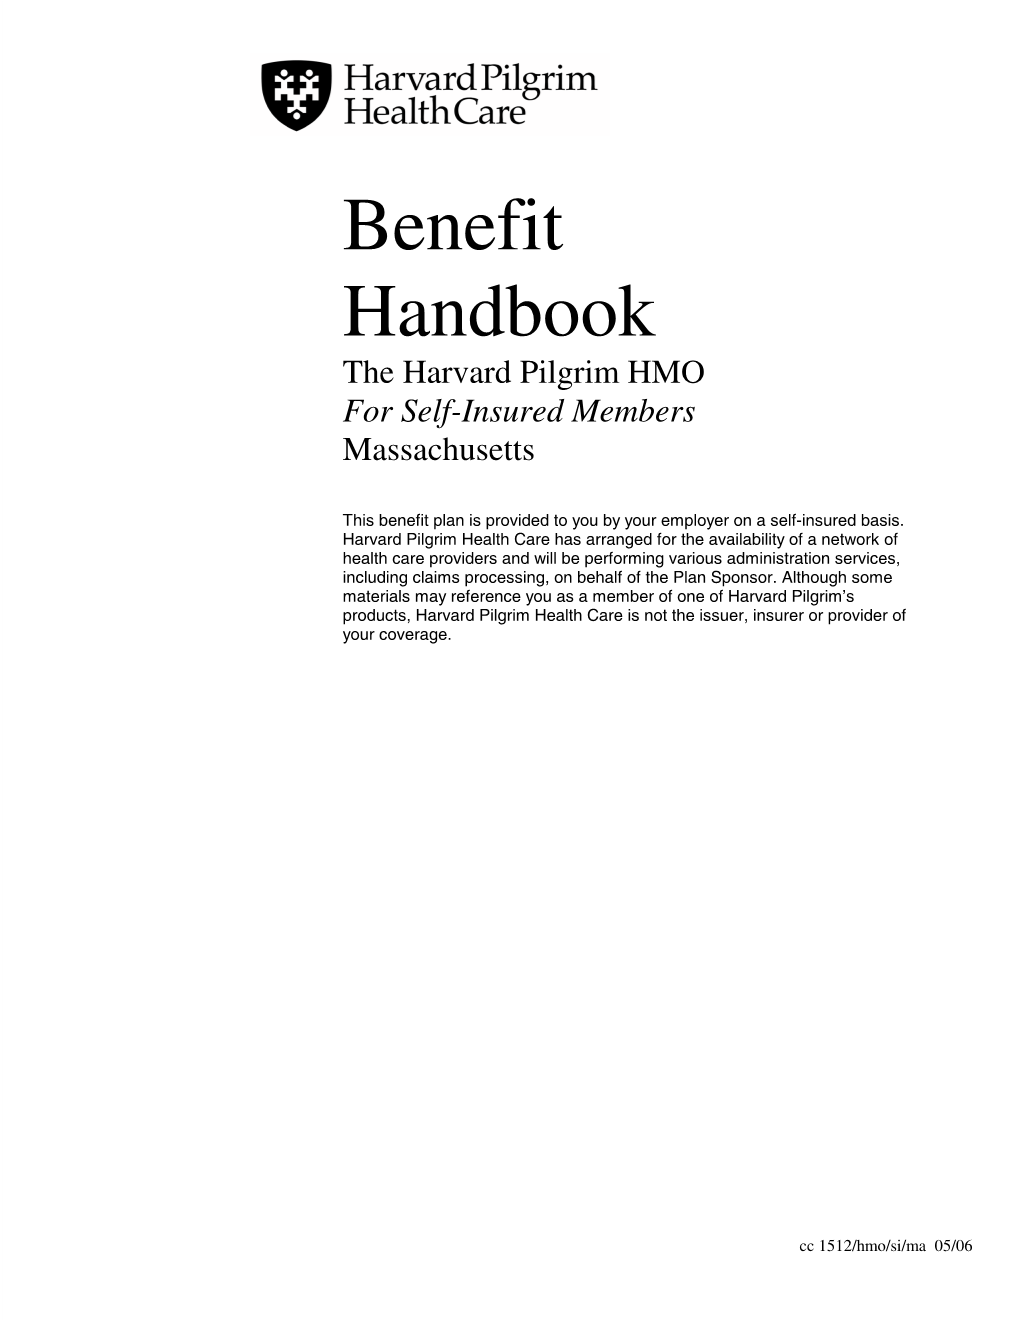 Benefit Handbook the Harvard Pilgrim HMO for Self�Insured Members Massachusetts